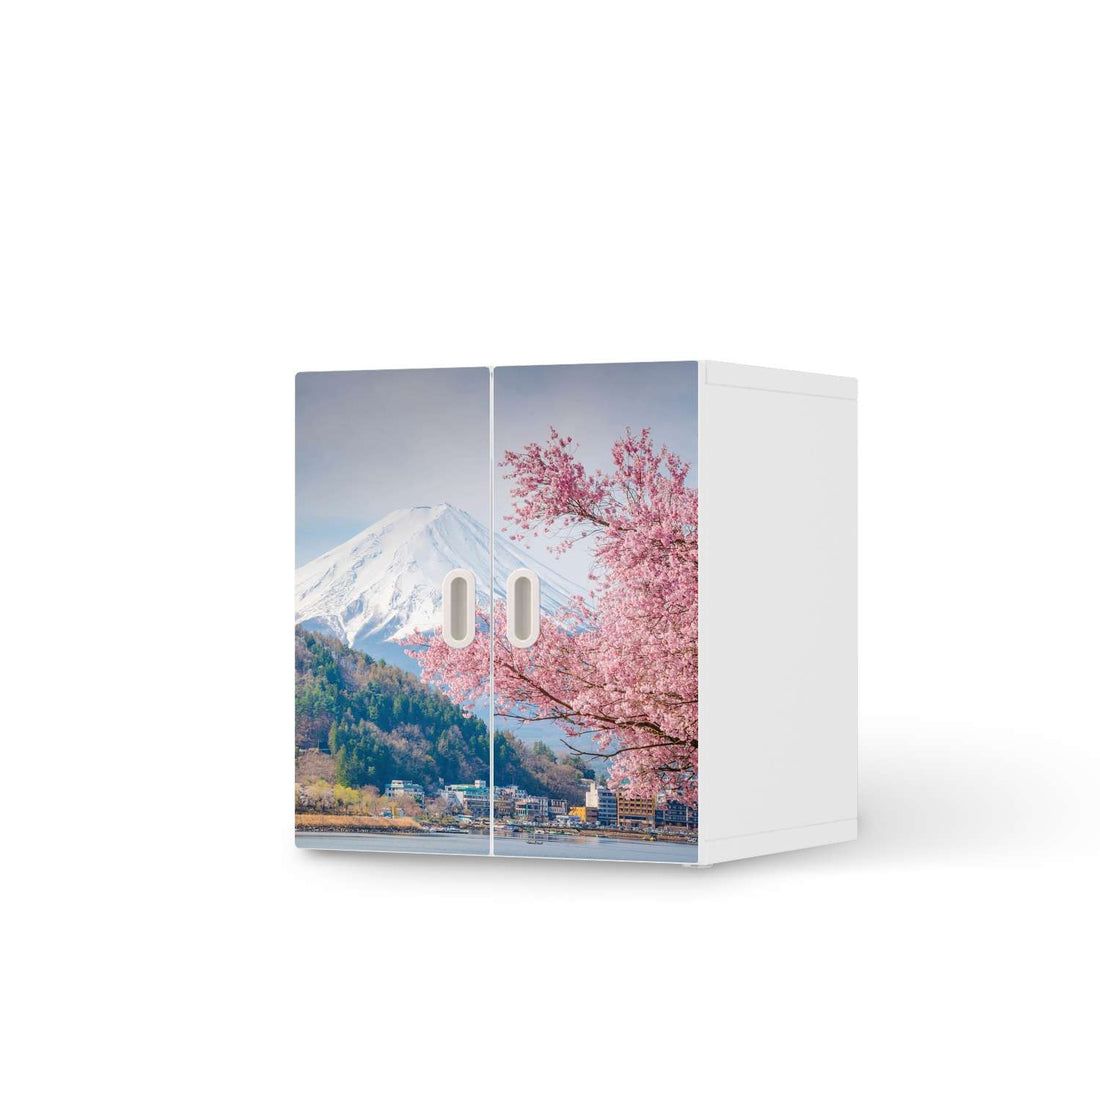 Selbstklebende Folie Mount Fuji - IKEA Stuva / Fritids Schrank - 2 kleine Türen  - weiss